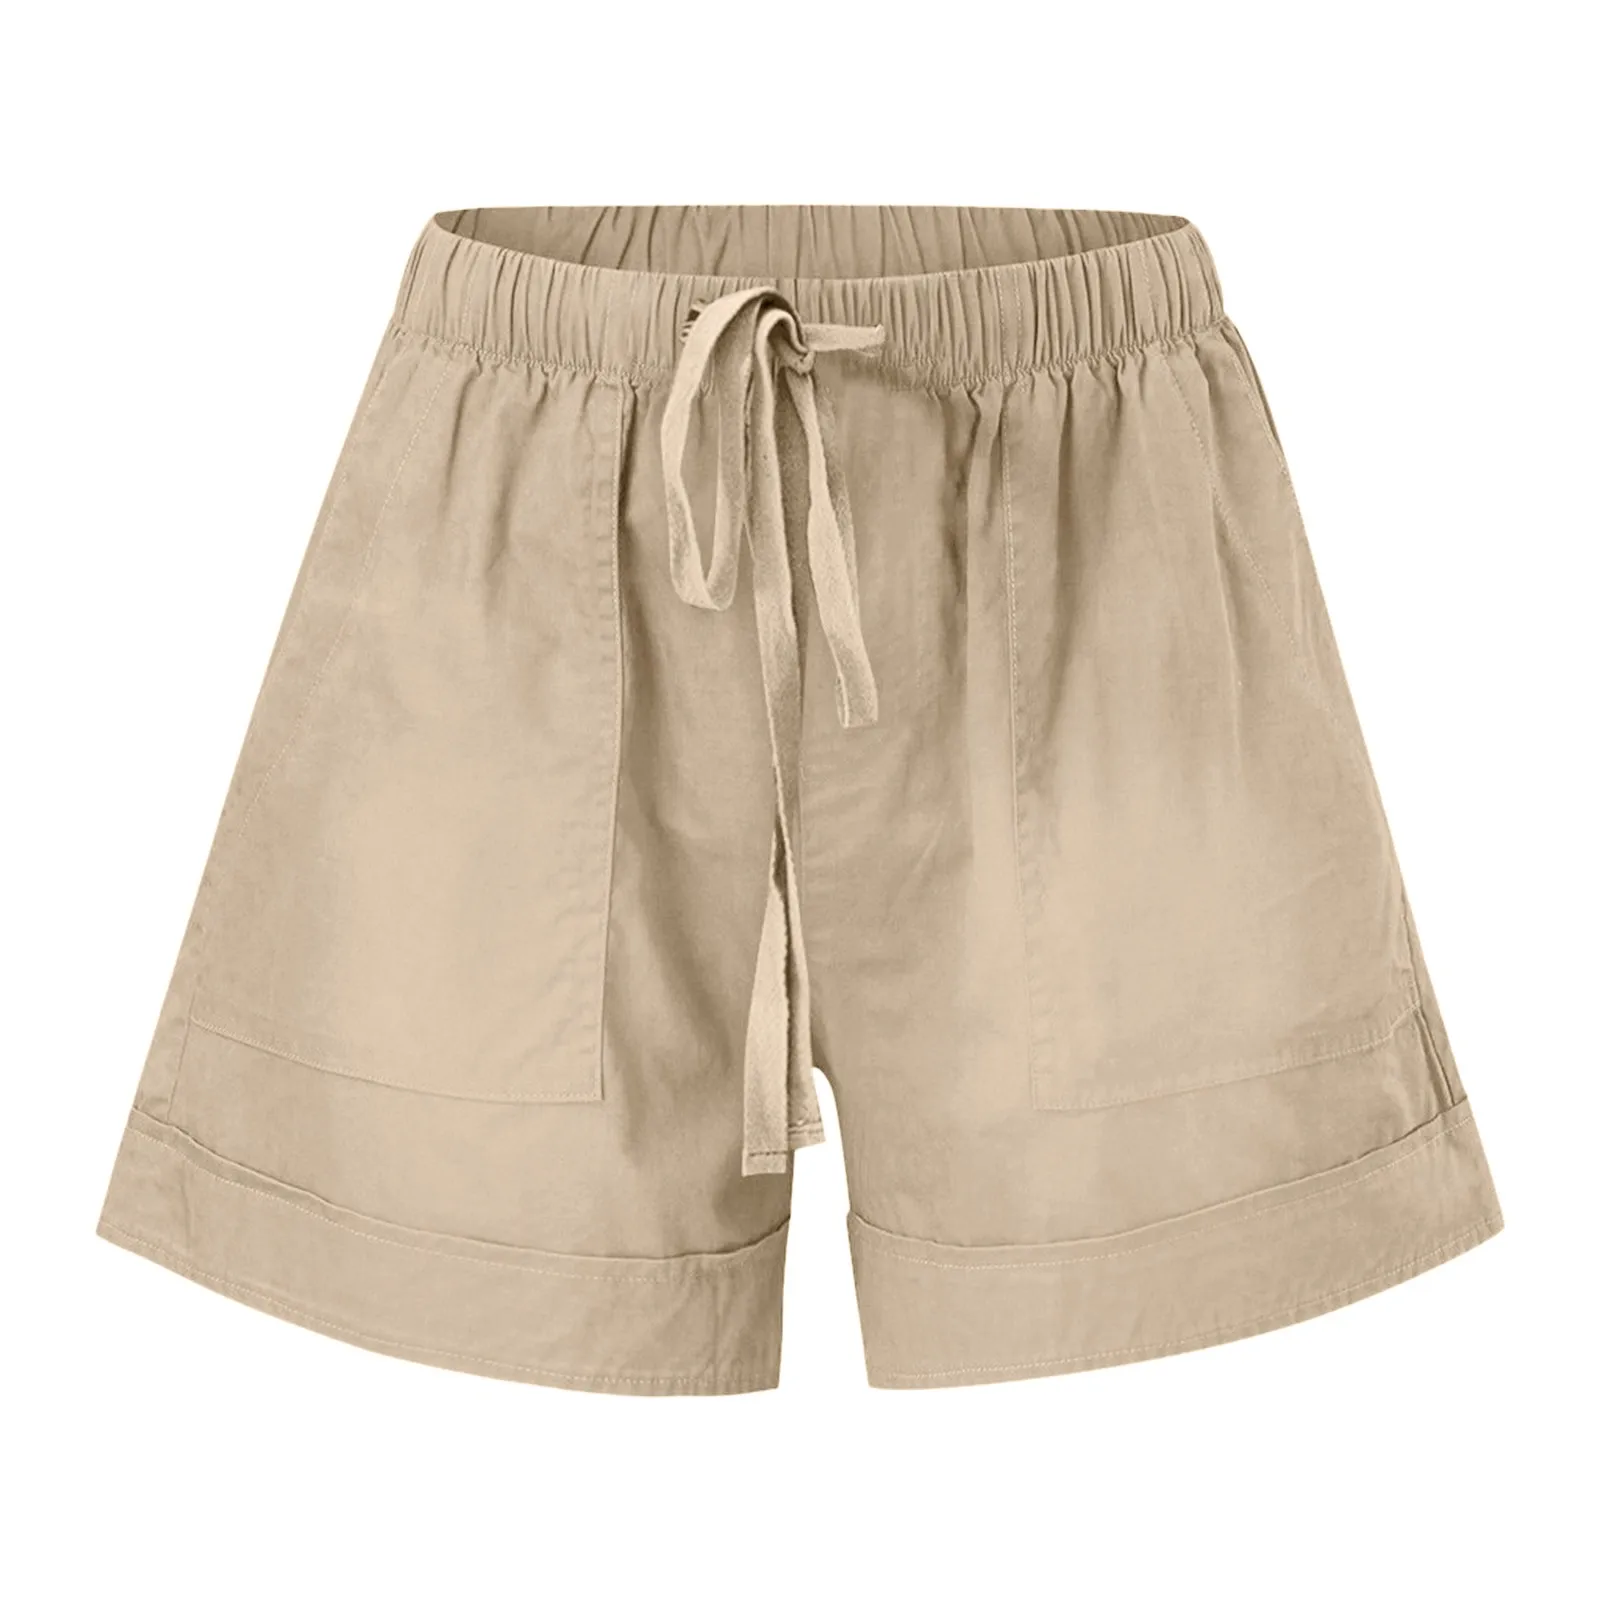 lululemon shorts 2021 New Womens Plus Size Short Comfy Drawstring Casual Elastic Waist Pocket Loose Shorts Pants High Quality Simple Daily Pants skorts